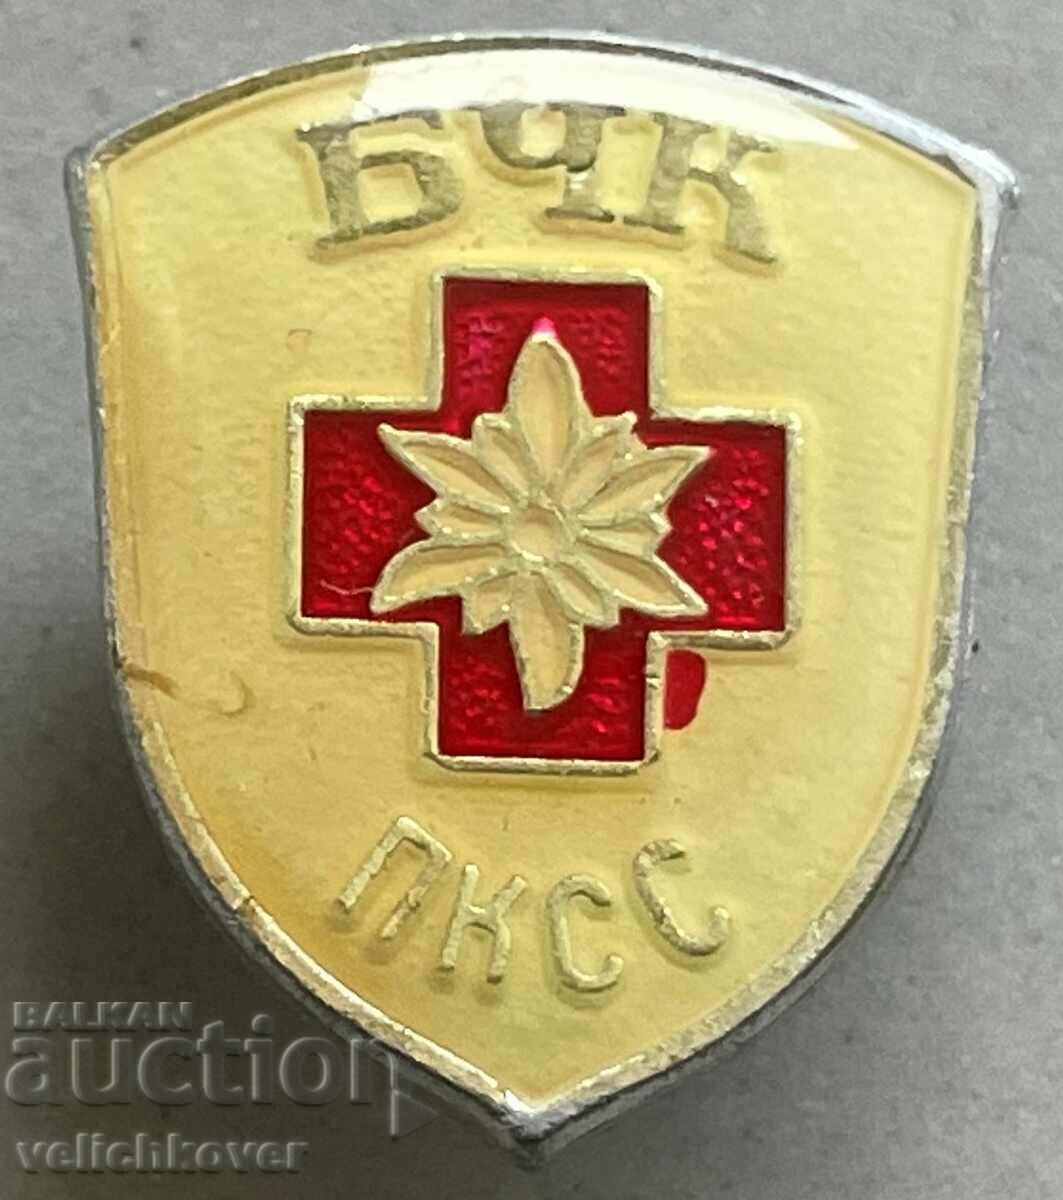 33401 Bulgaria PKSS Mountain Control and Rescue Service